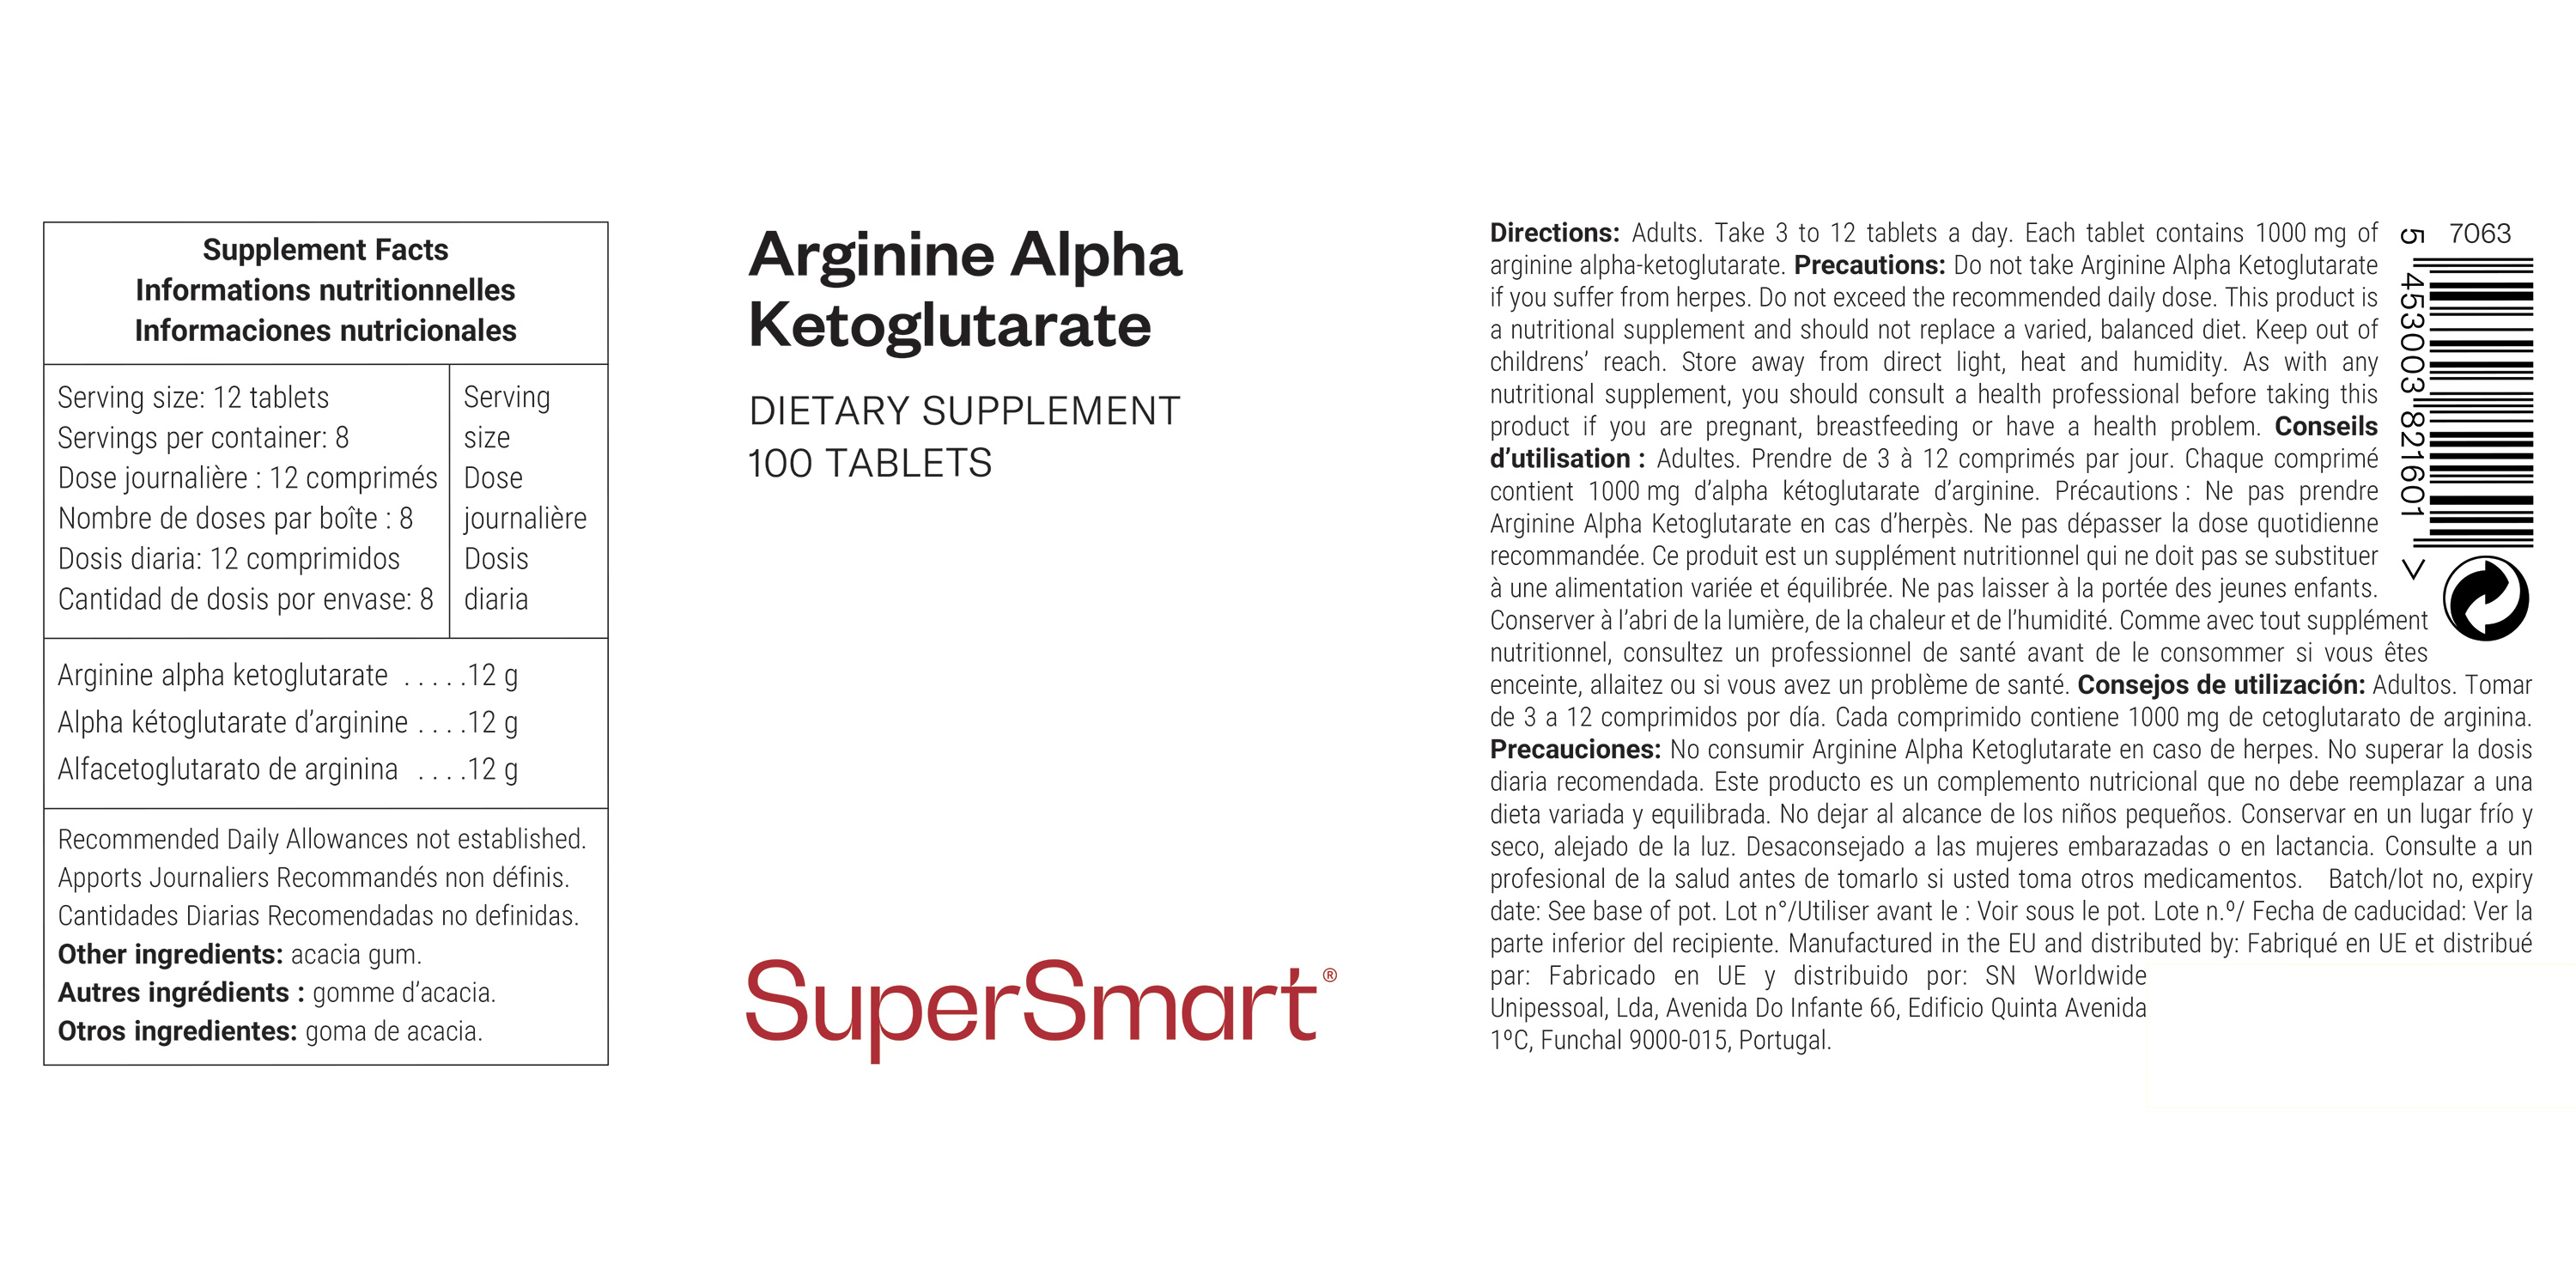 Complemento alimenticio Arginine Alpha Ketoglutarate (AAKG)